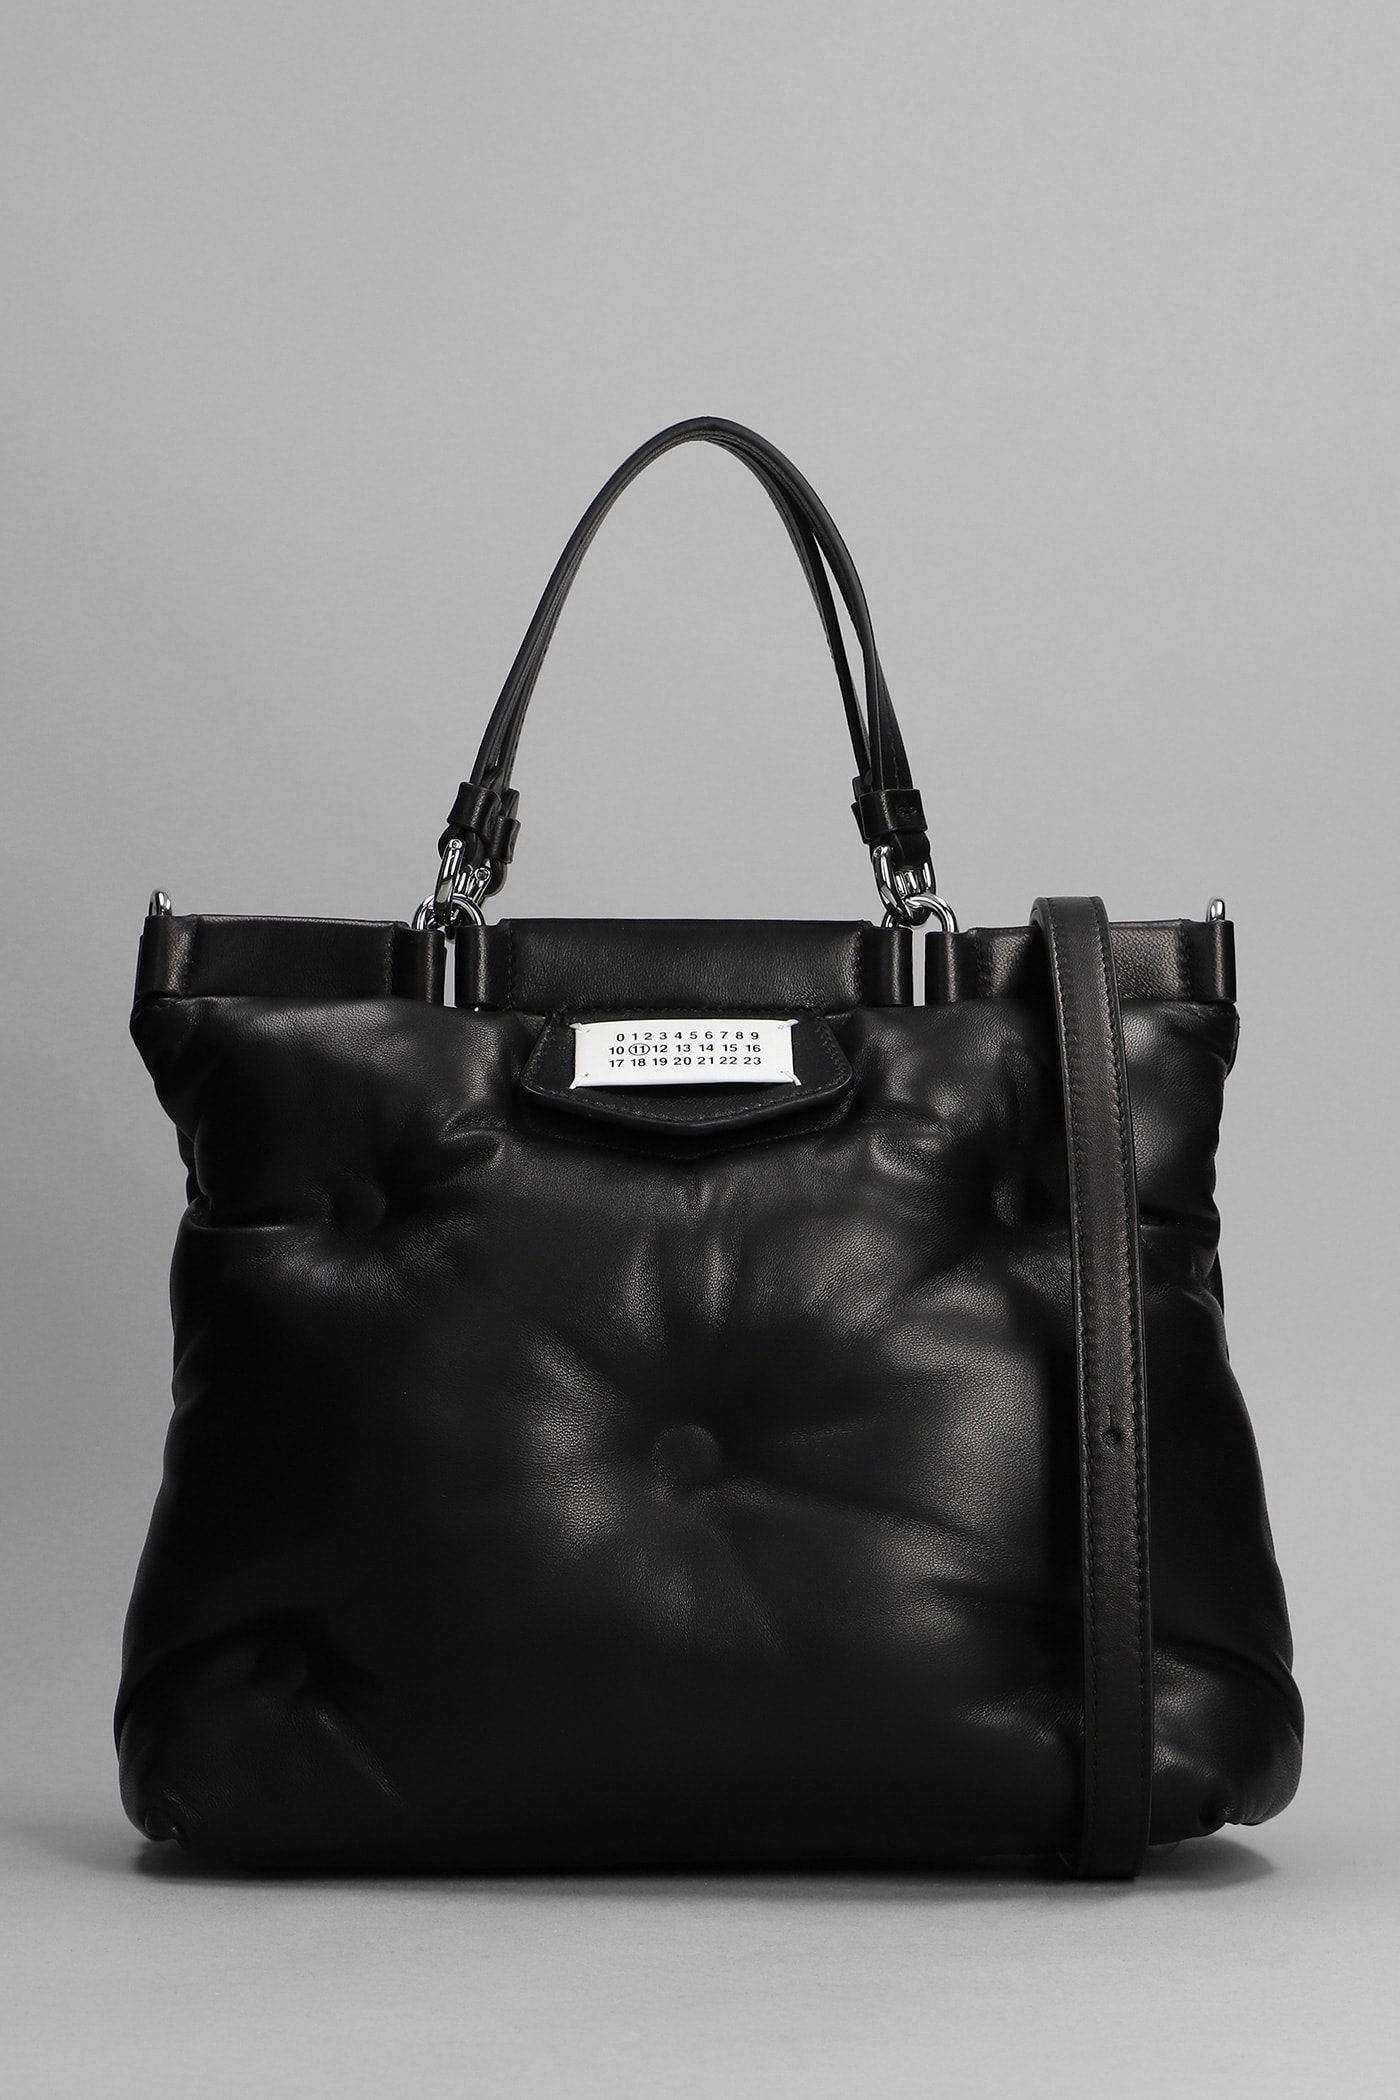 Maison Margiela Glam Slam Hand Bag In Black Leather